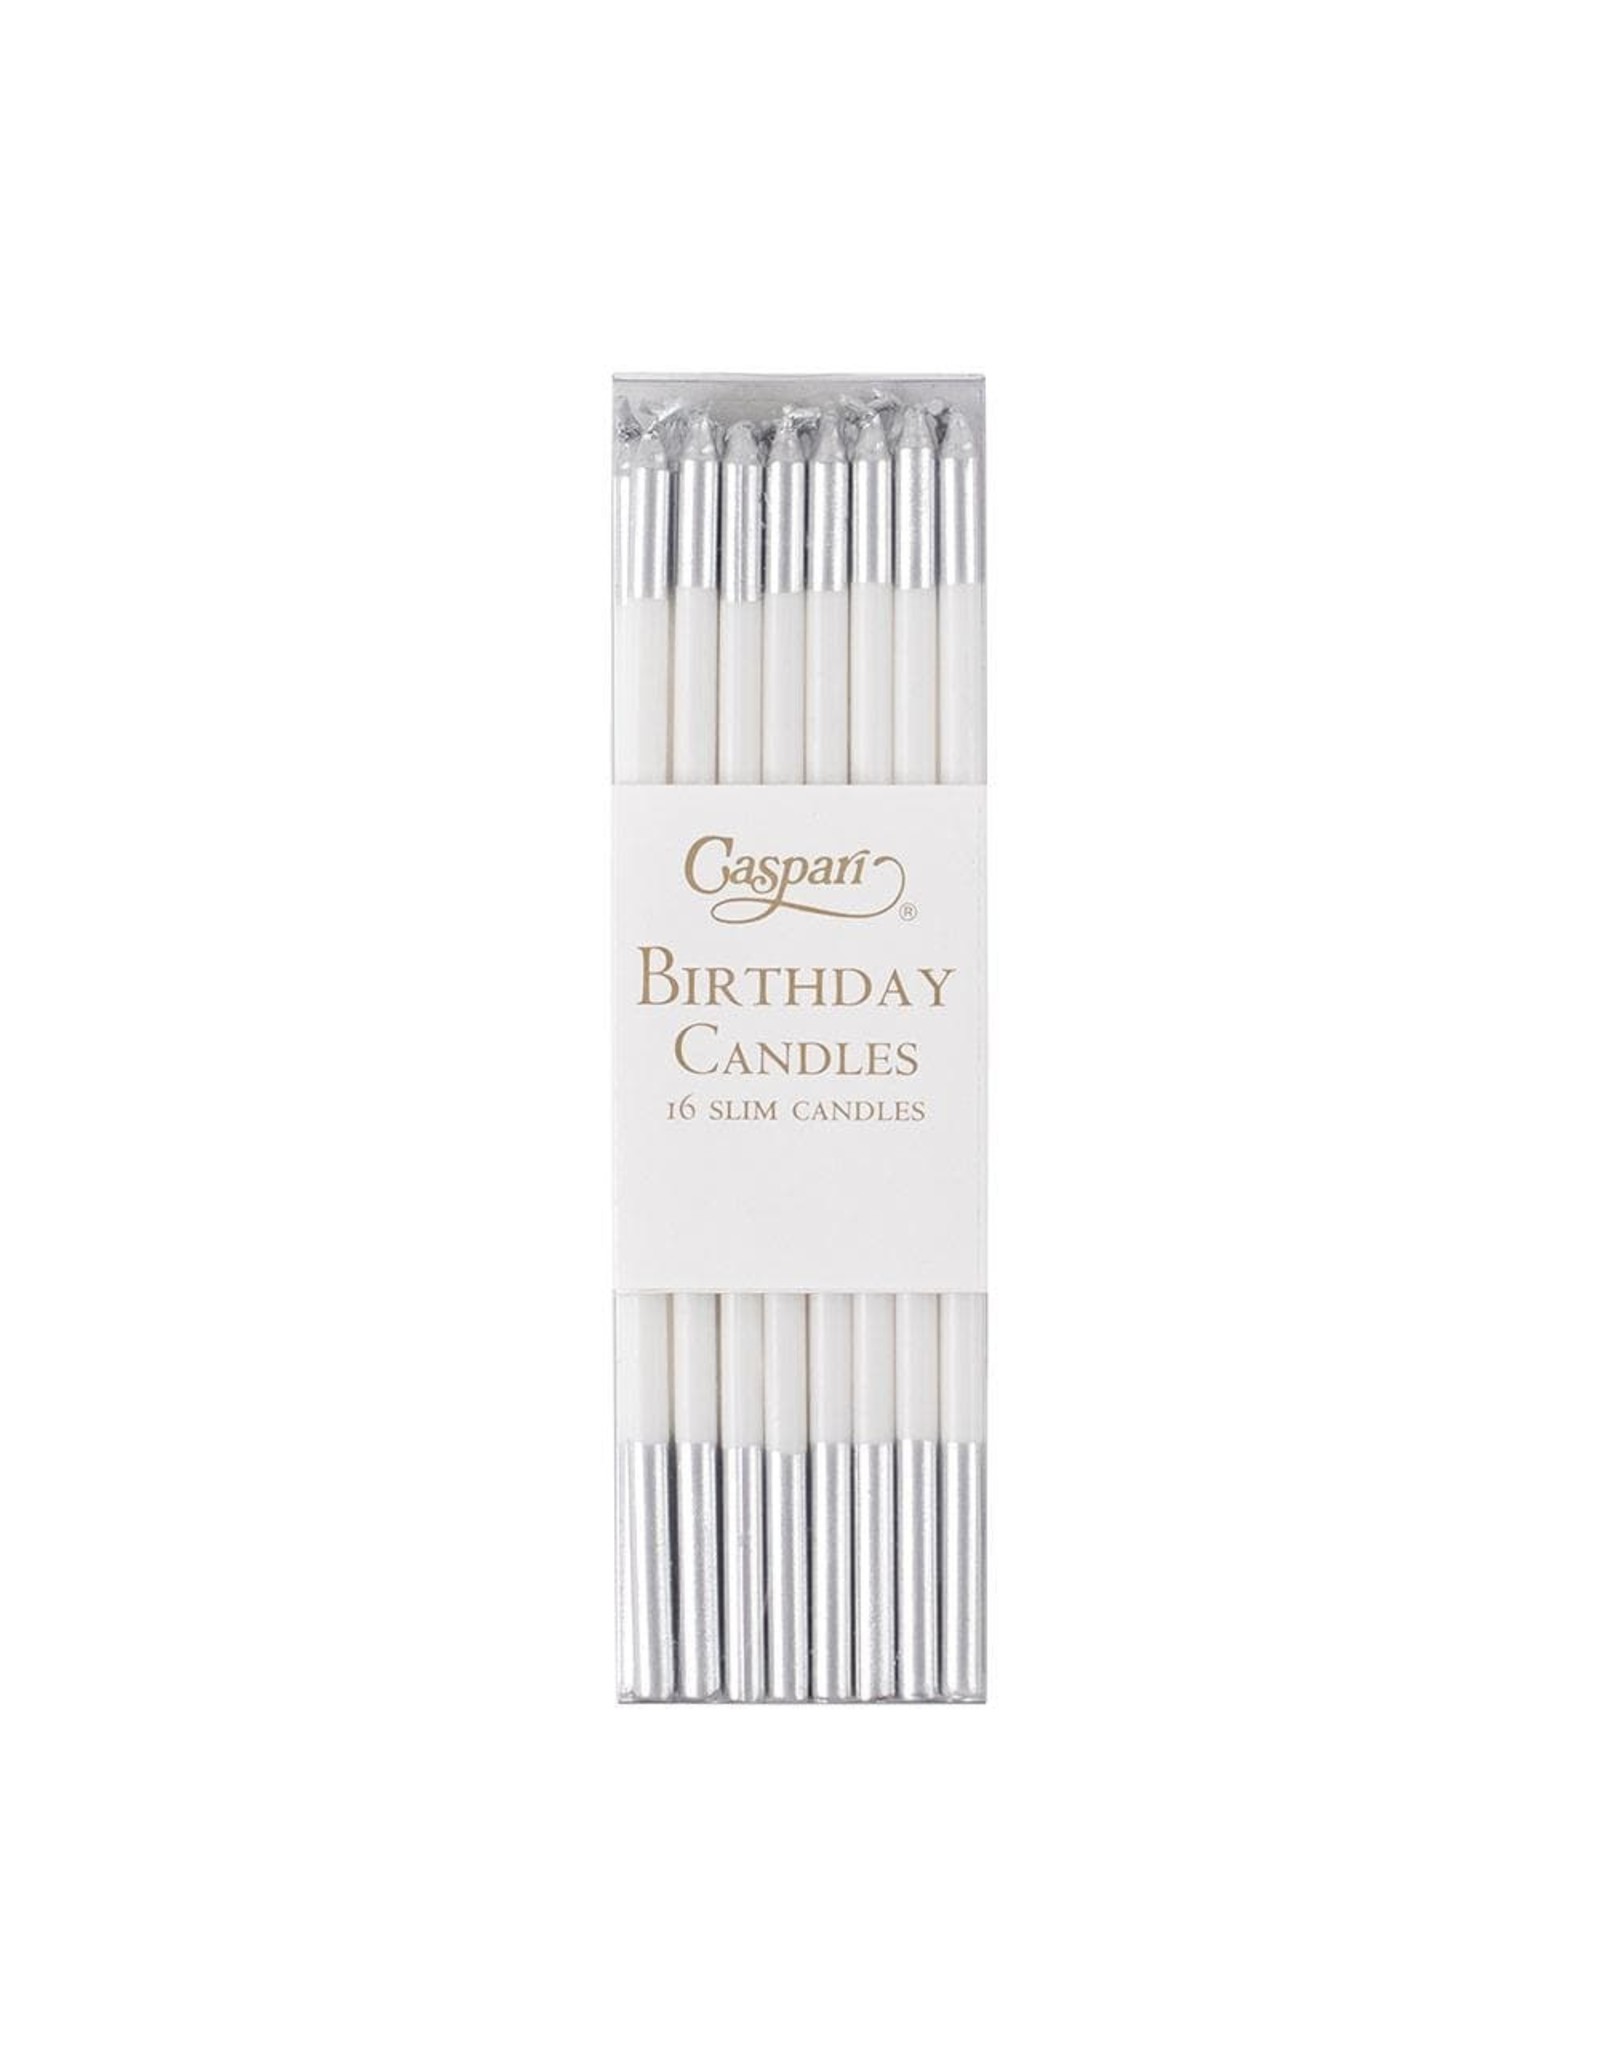 Caspari Slim Birthday Candles 16PK In White And Silver